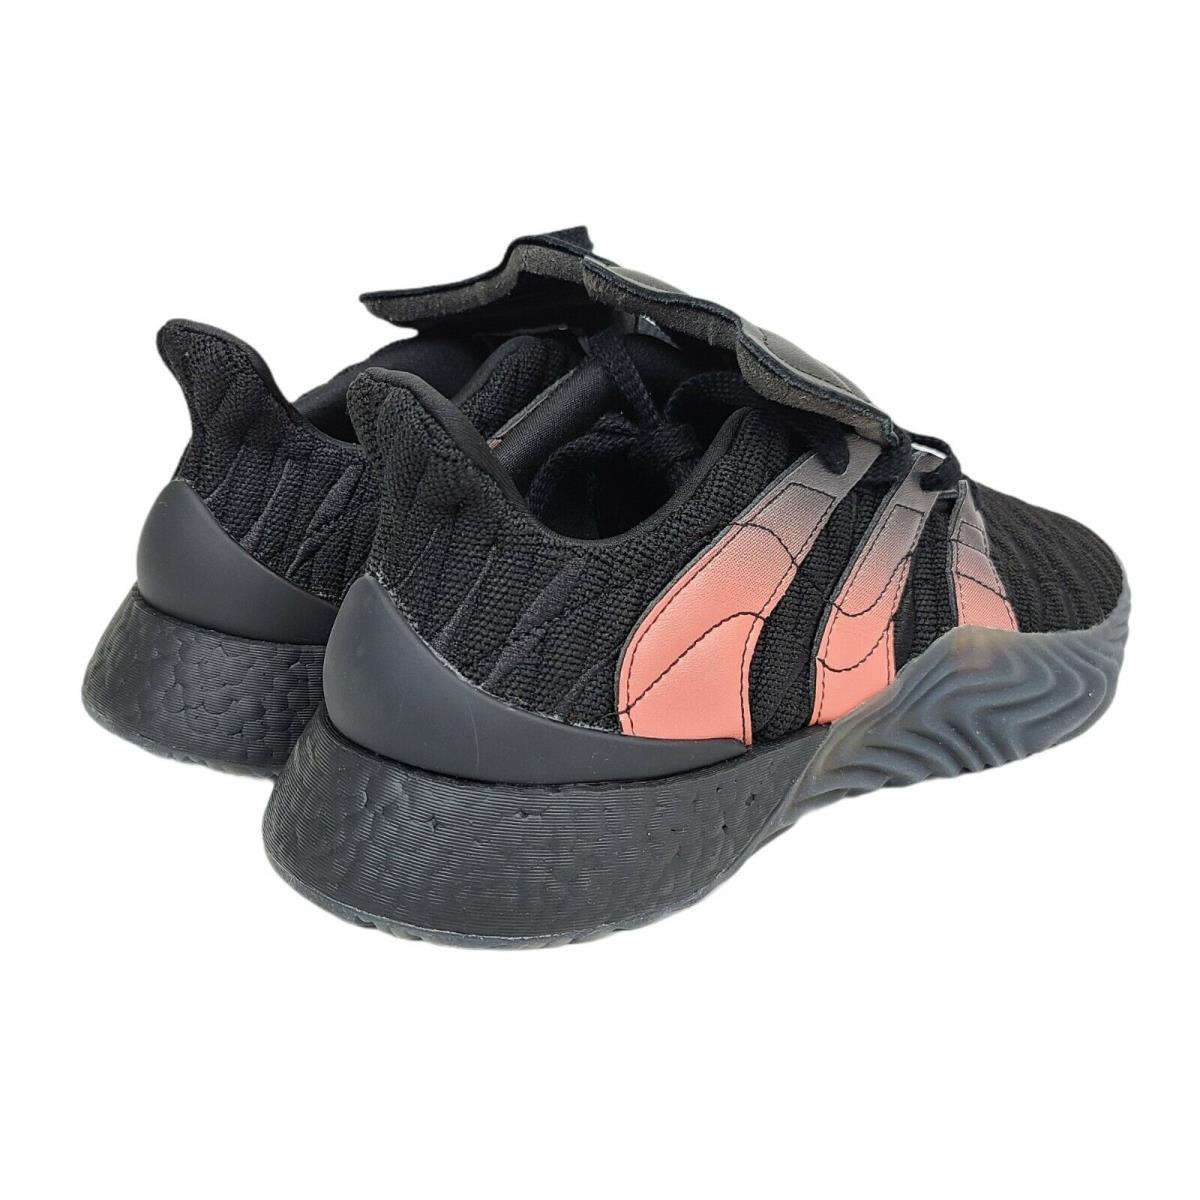 Adidas shoes Sobakov - Black, Manufacturer: core black/solar orange/core black 5